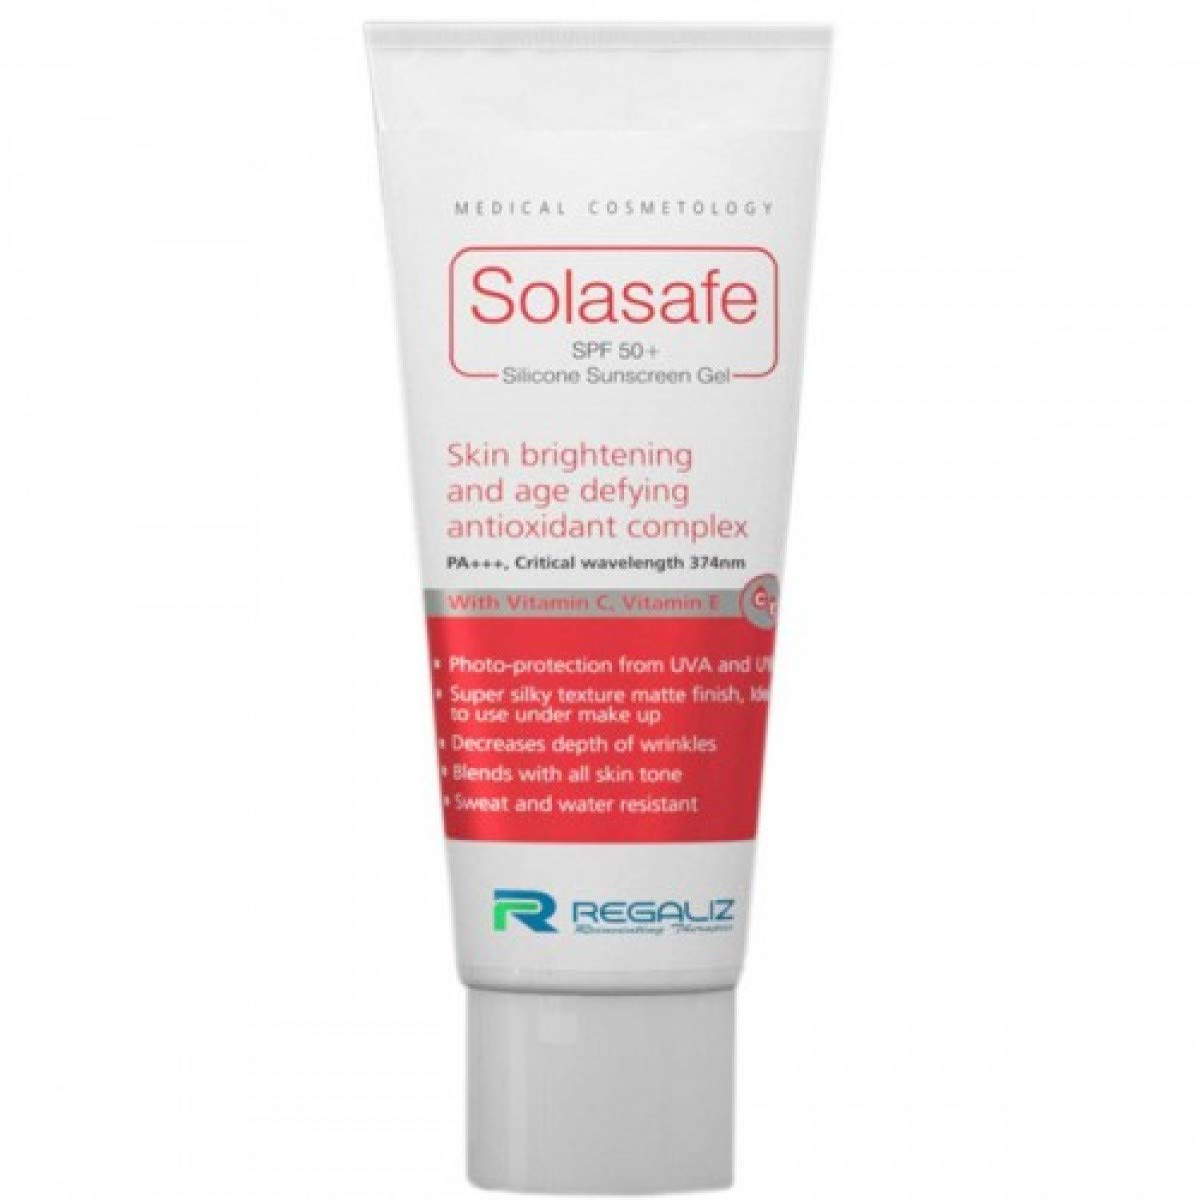 Regaliz Solasafe Sunscreen Spf 50+